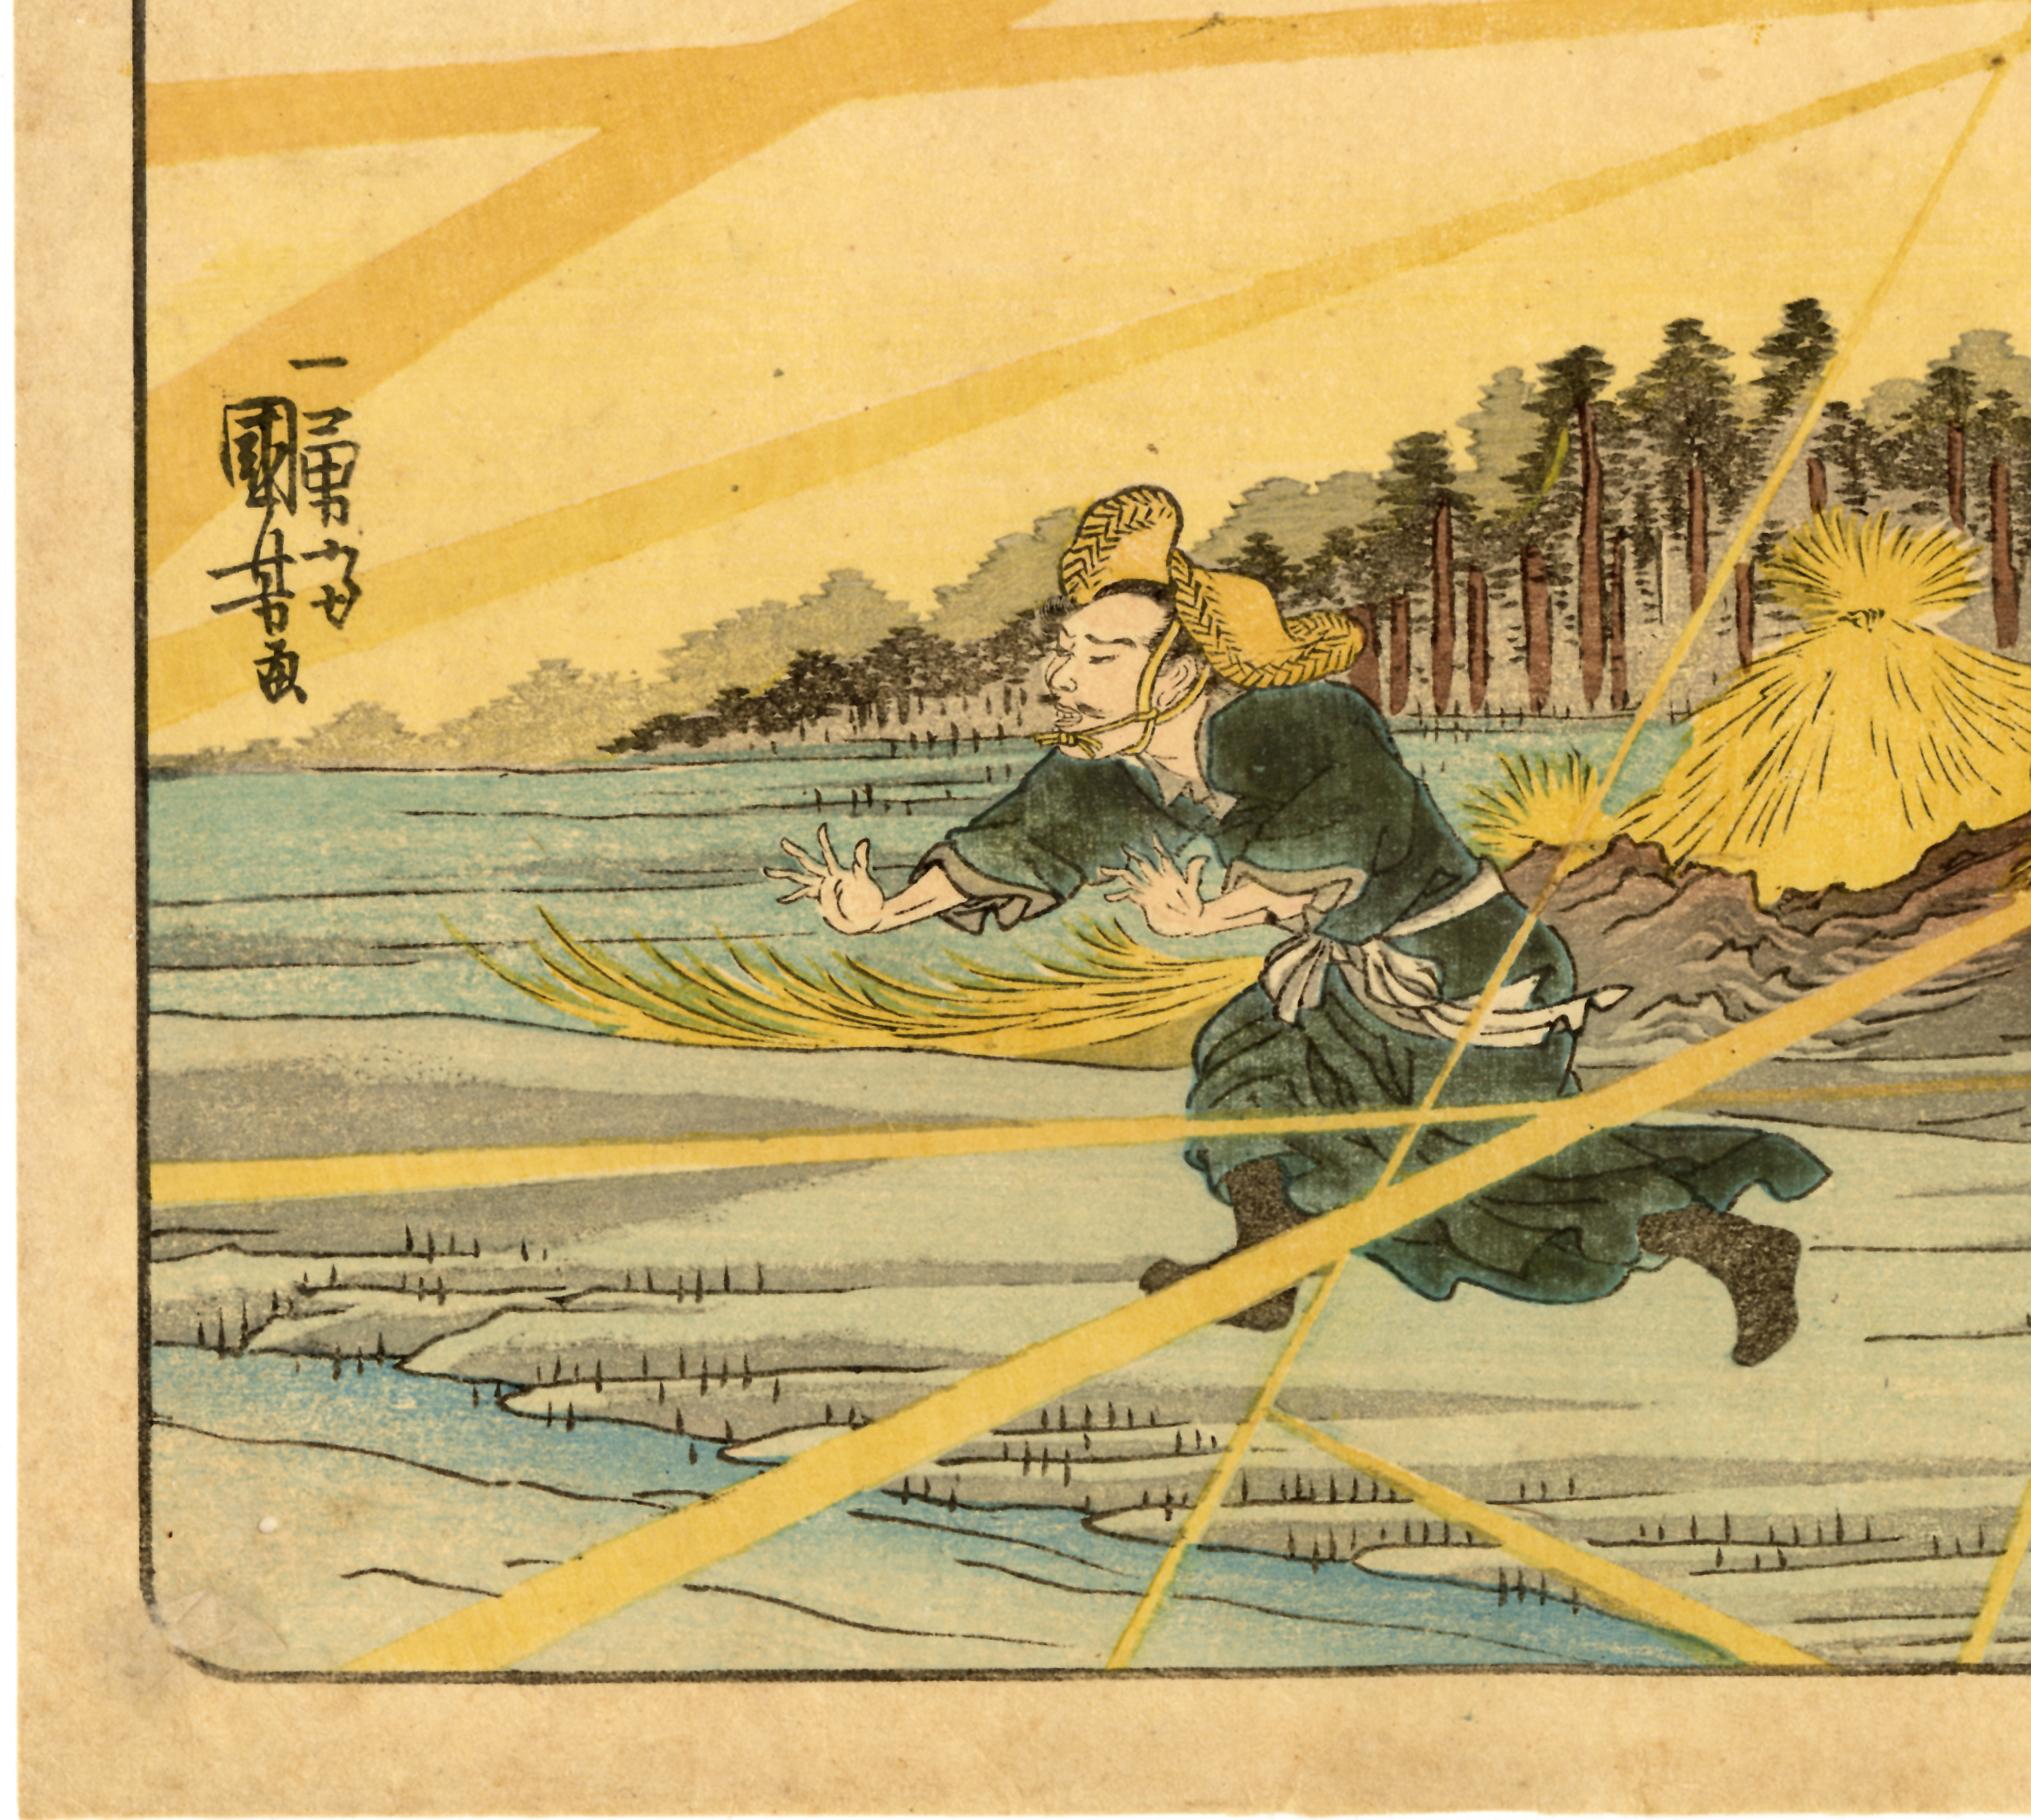 Wang Bao During a Lightning Storm from the 24 (Chinese) Paragons of Filial Piety - Print by Utagawa Kuniyoshi